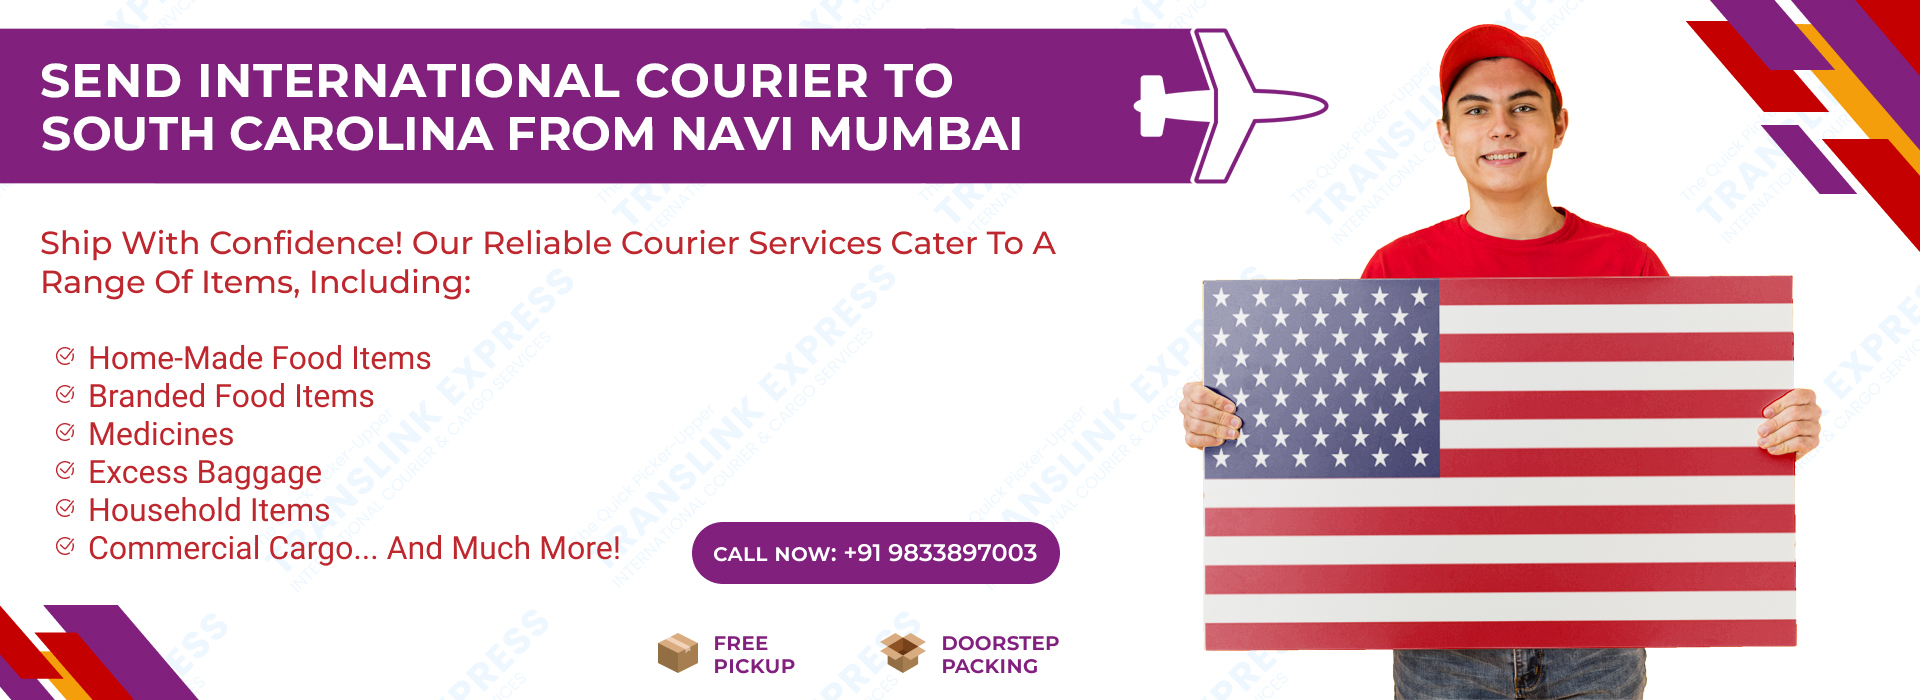 Courier to South Carolina From Navi Mumbai